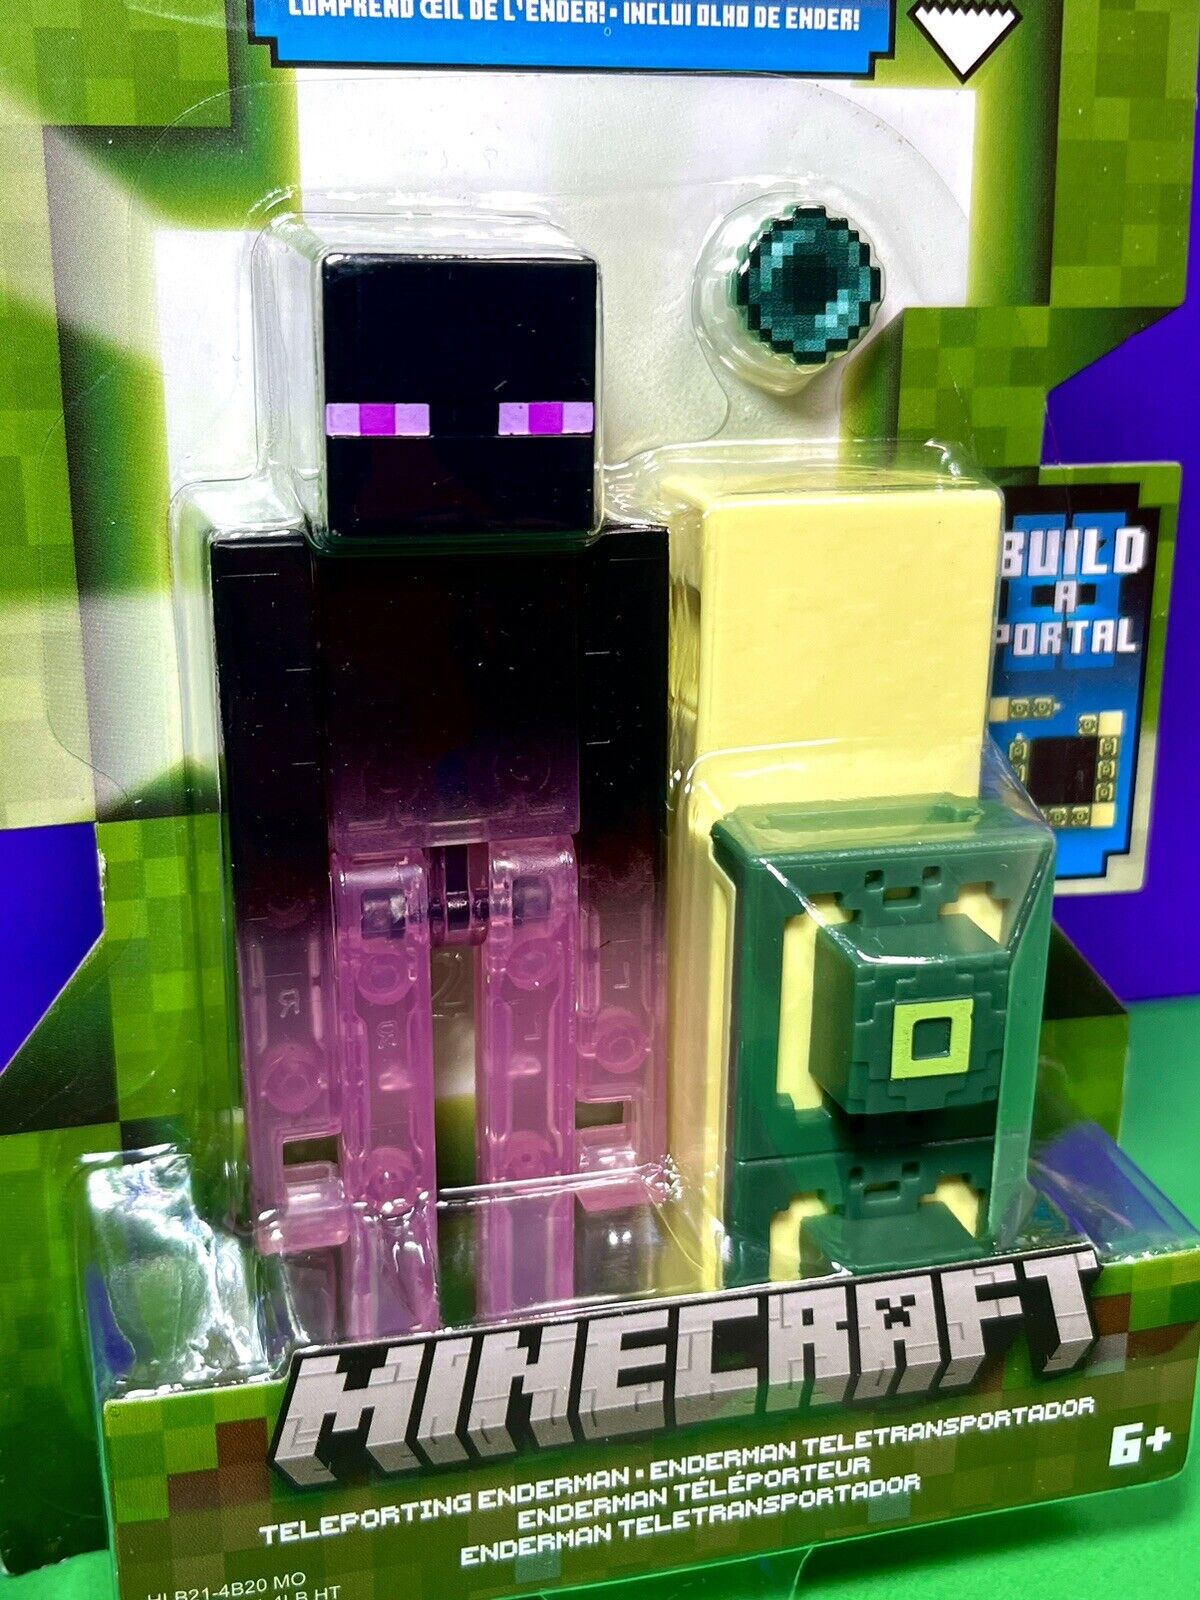 Minecraft Craft-A-Block Enderman Action Figure – Trends Elite